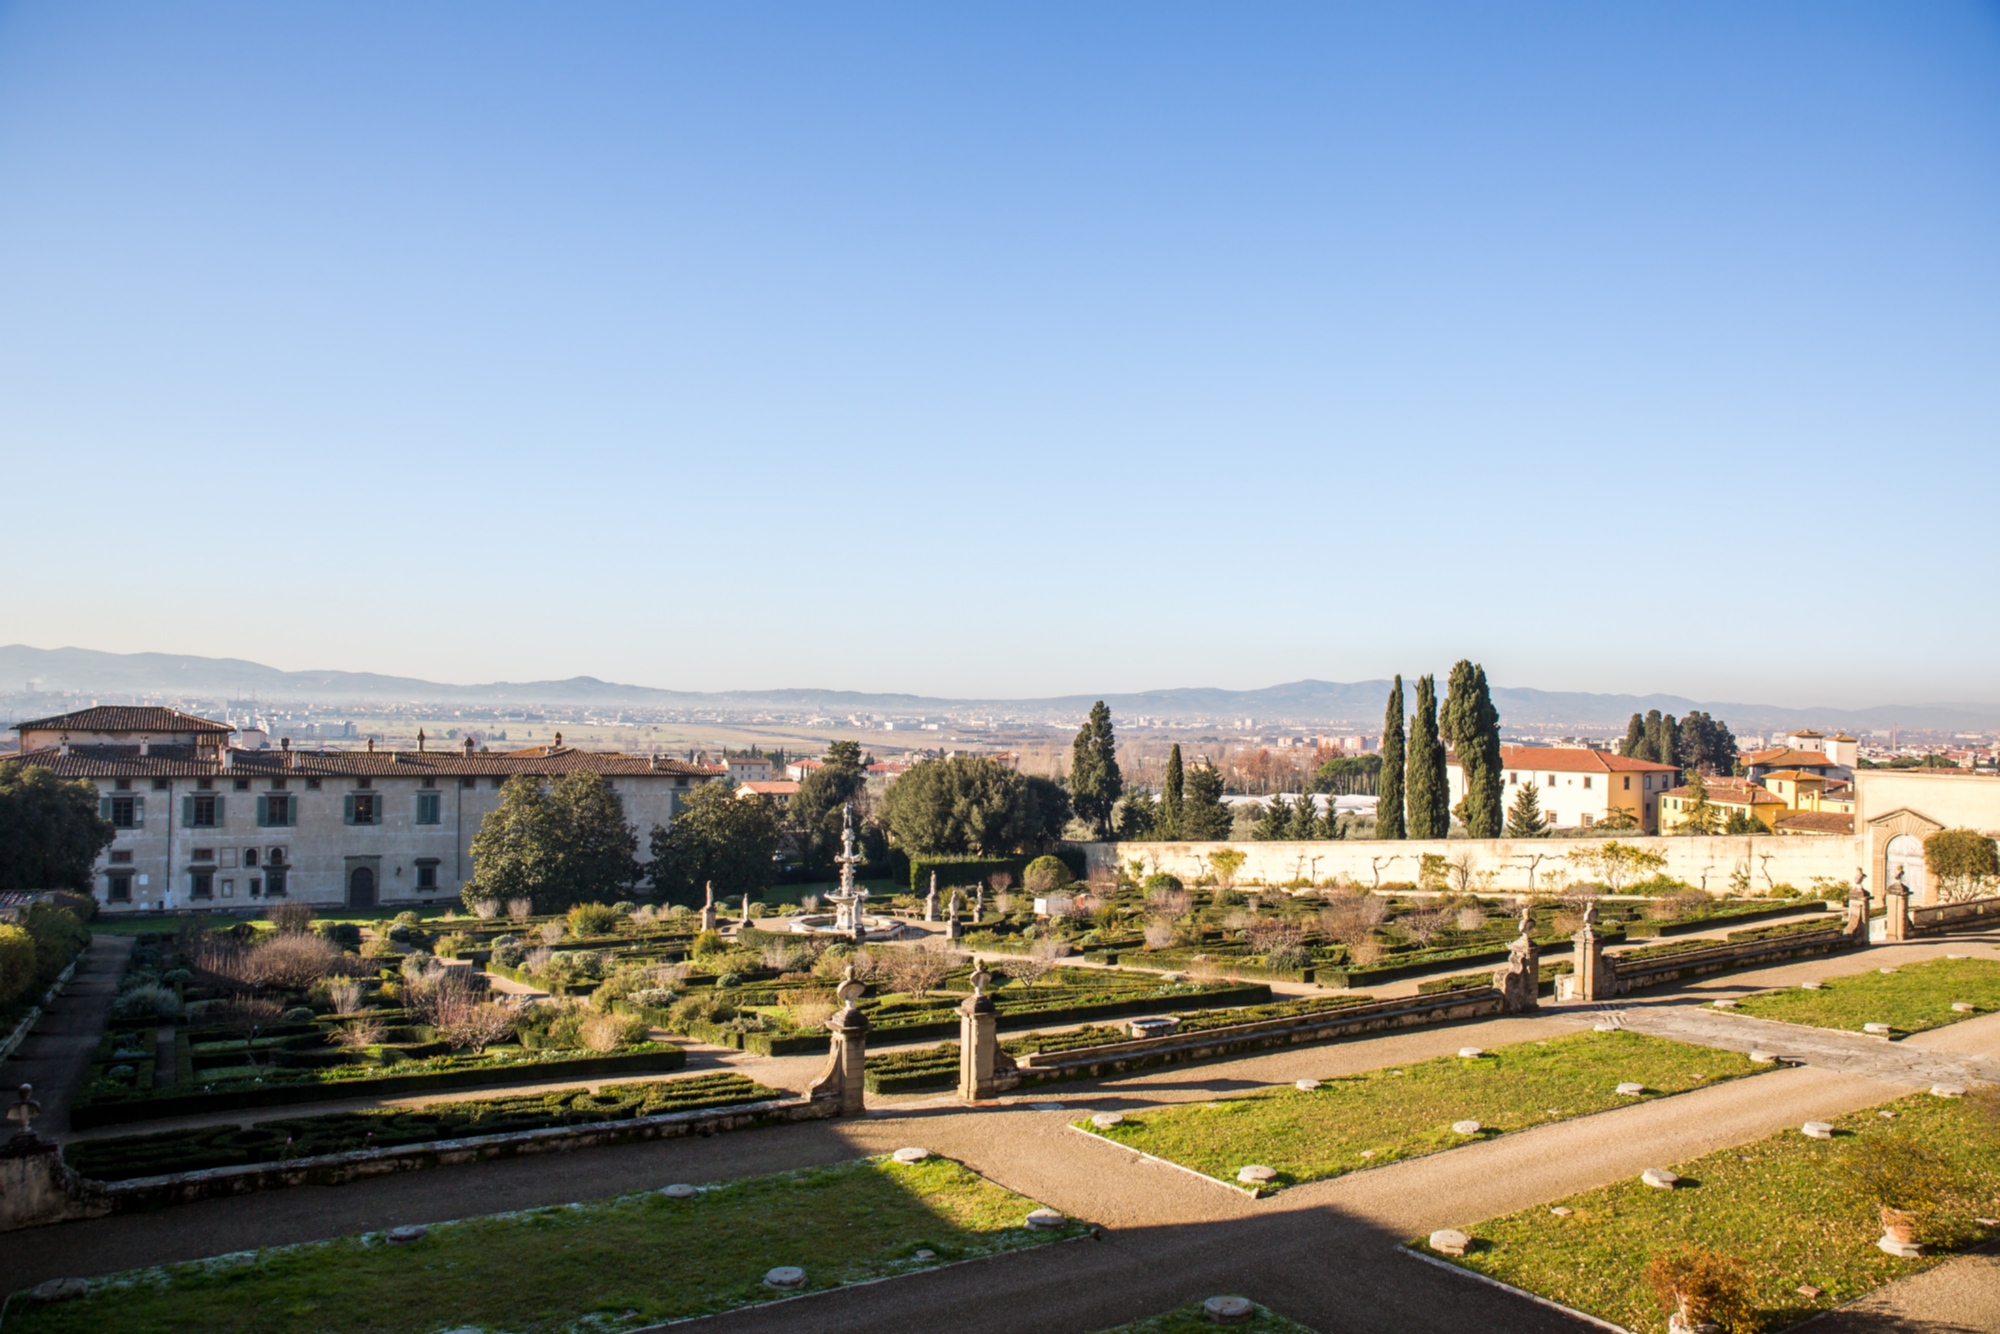 The garden of the Medici Villa di Castello